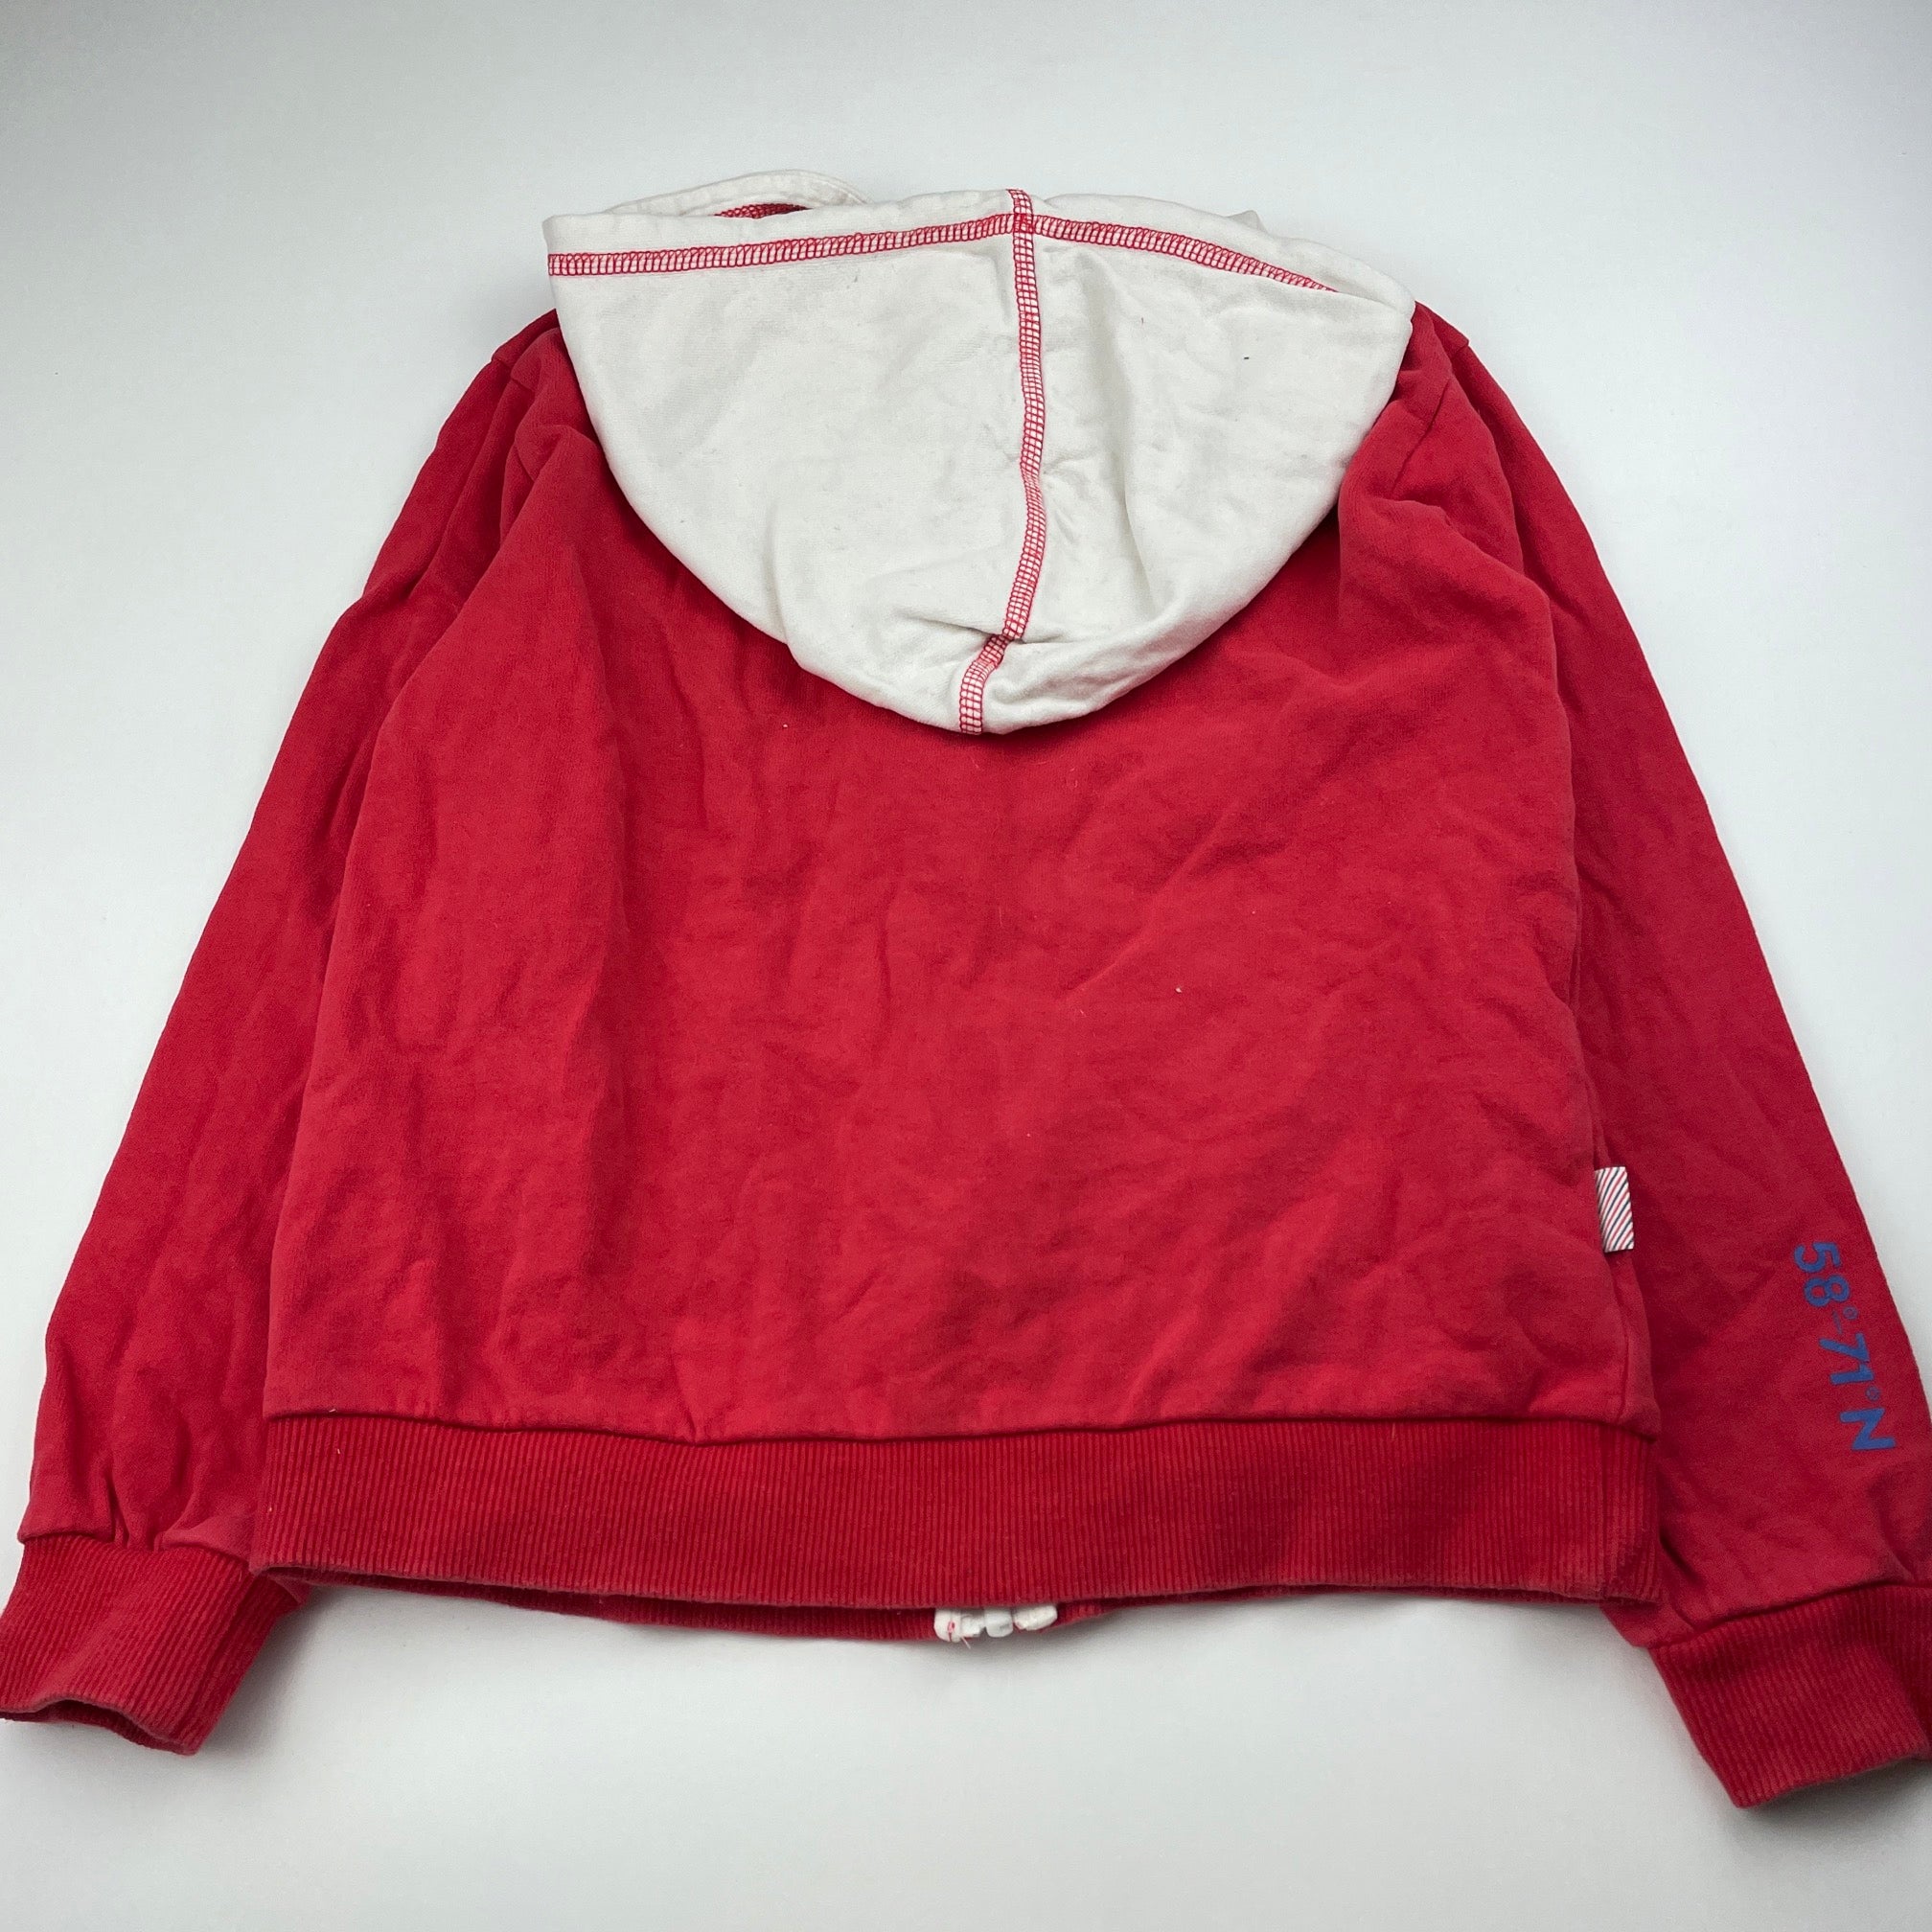 – North FUC, DaisyChainClothing cotton white sweater, size Norway, red zip hoodie Worn, & 8-10,